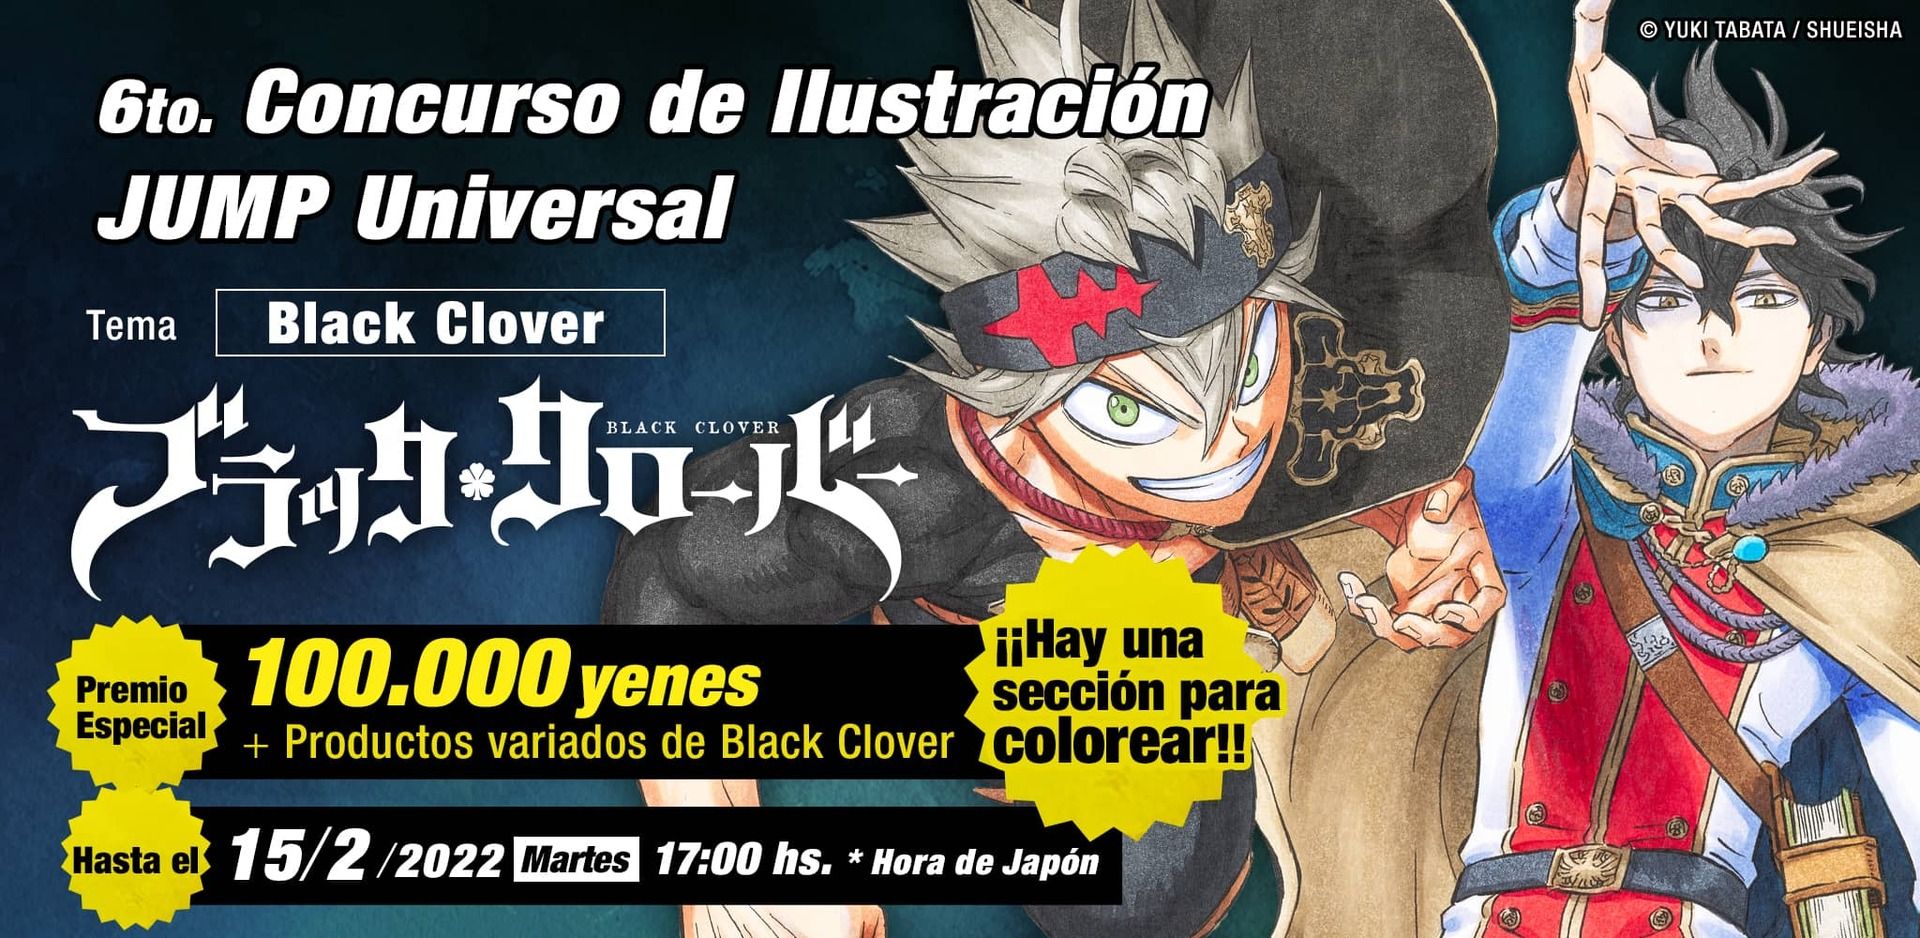 6to. Concurso de Ilustración JUMP Universal Tema: Black Clover 2021